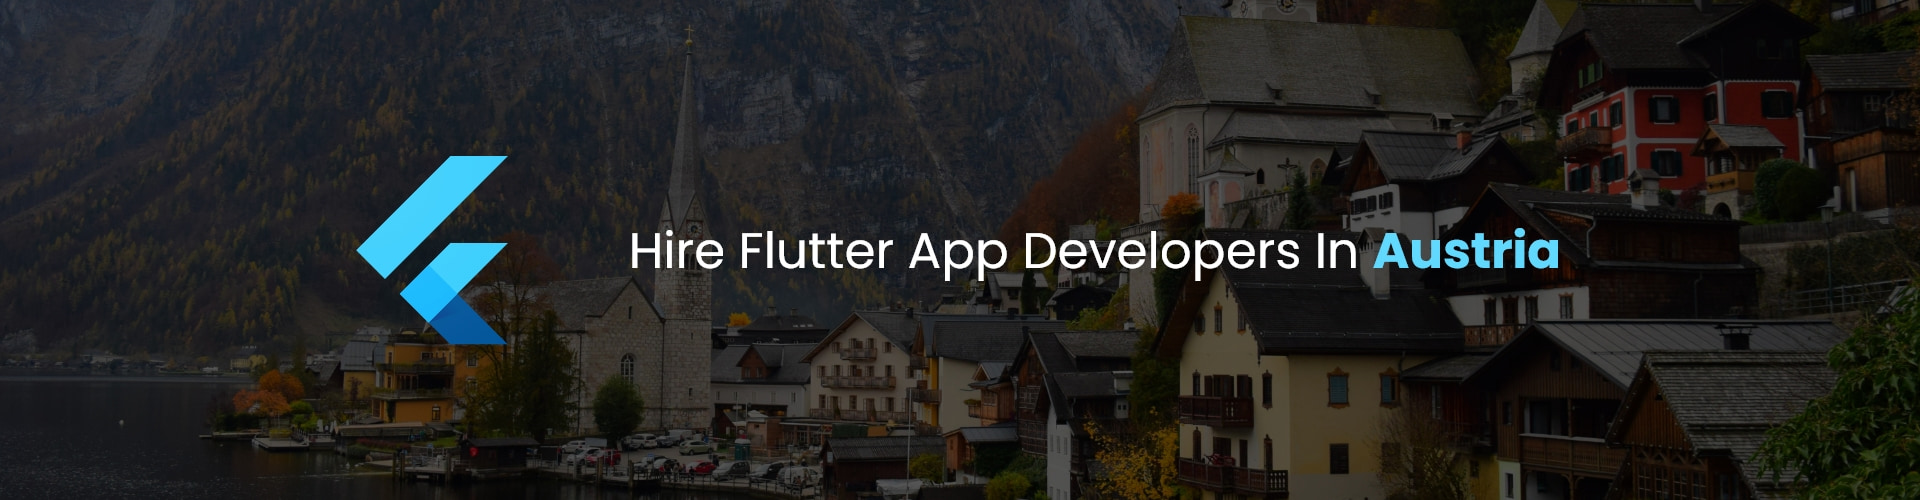 hire flutter app developers in austria